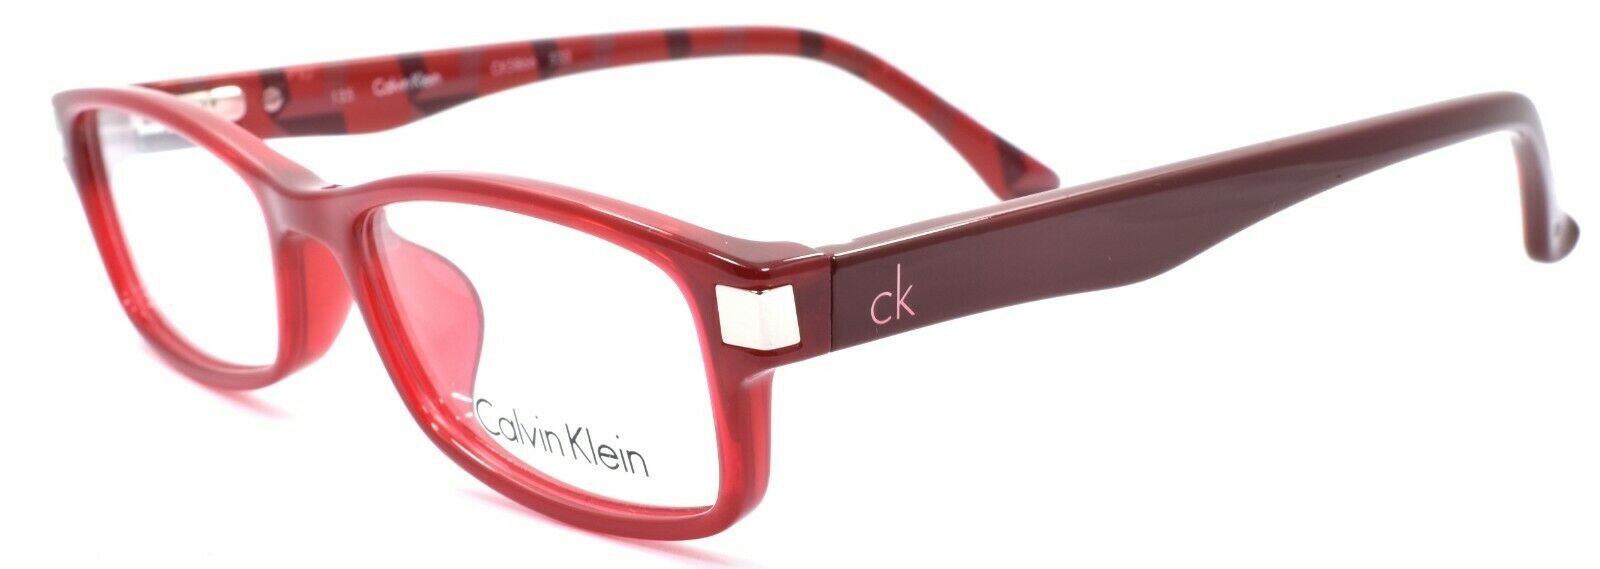 1-Calvin Klein CK5866 533 Women's Eyeglasses Frames PETITE 46-15-135 Coral Red-750779078204-IKSpecs